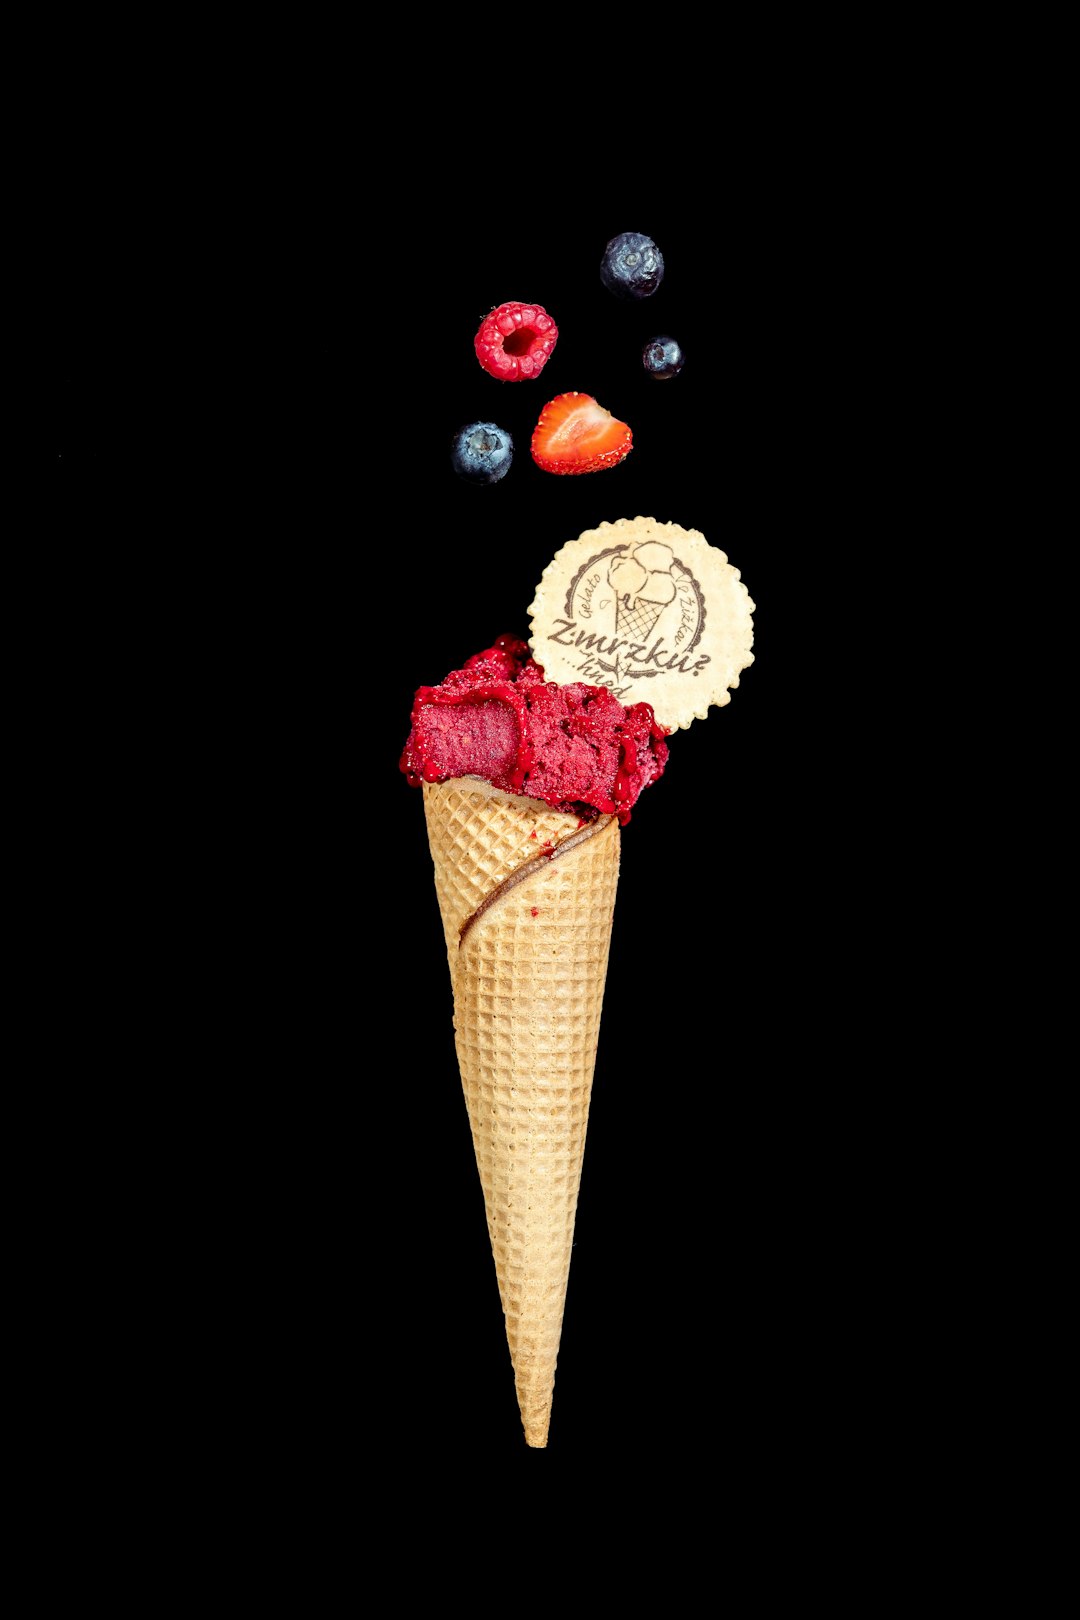 ice cream cone with red and white ice cream